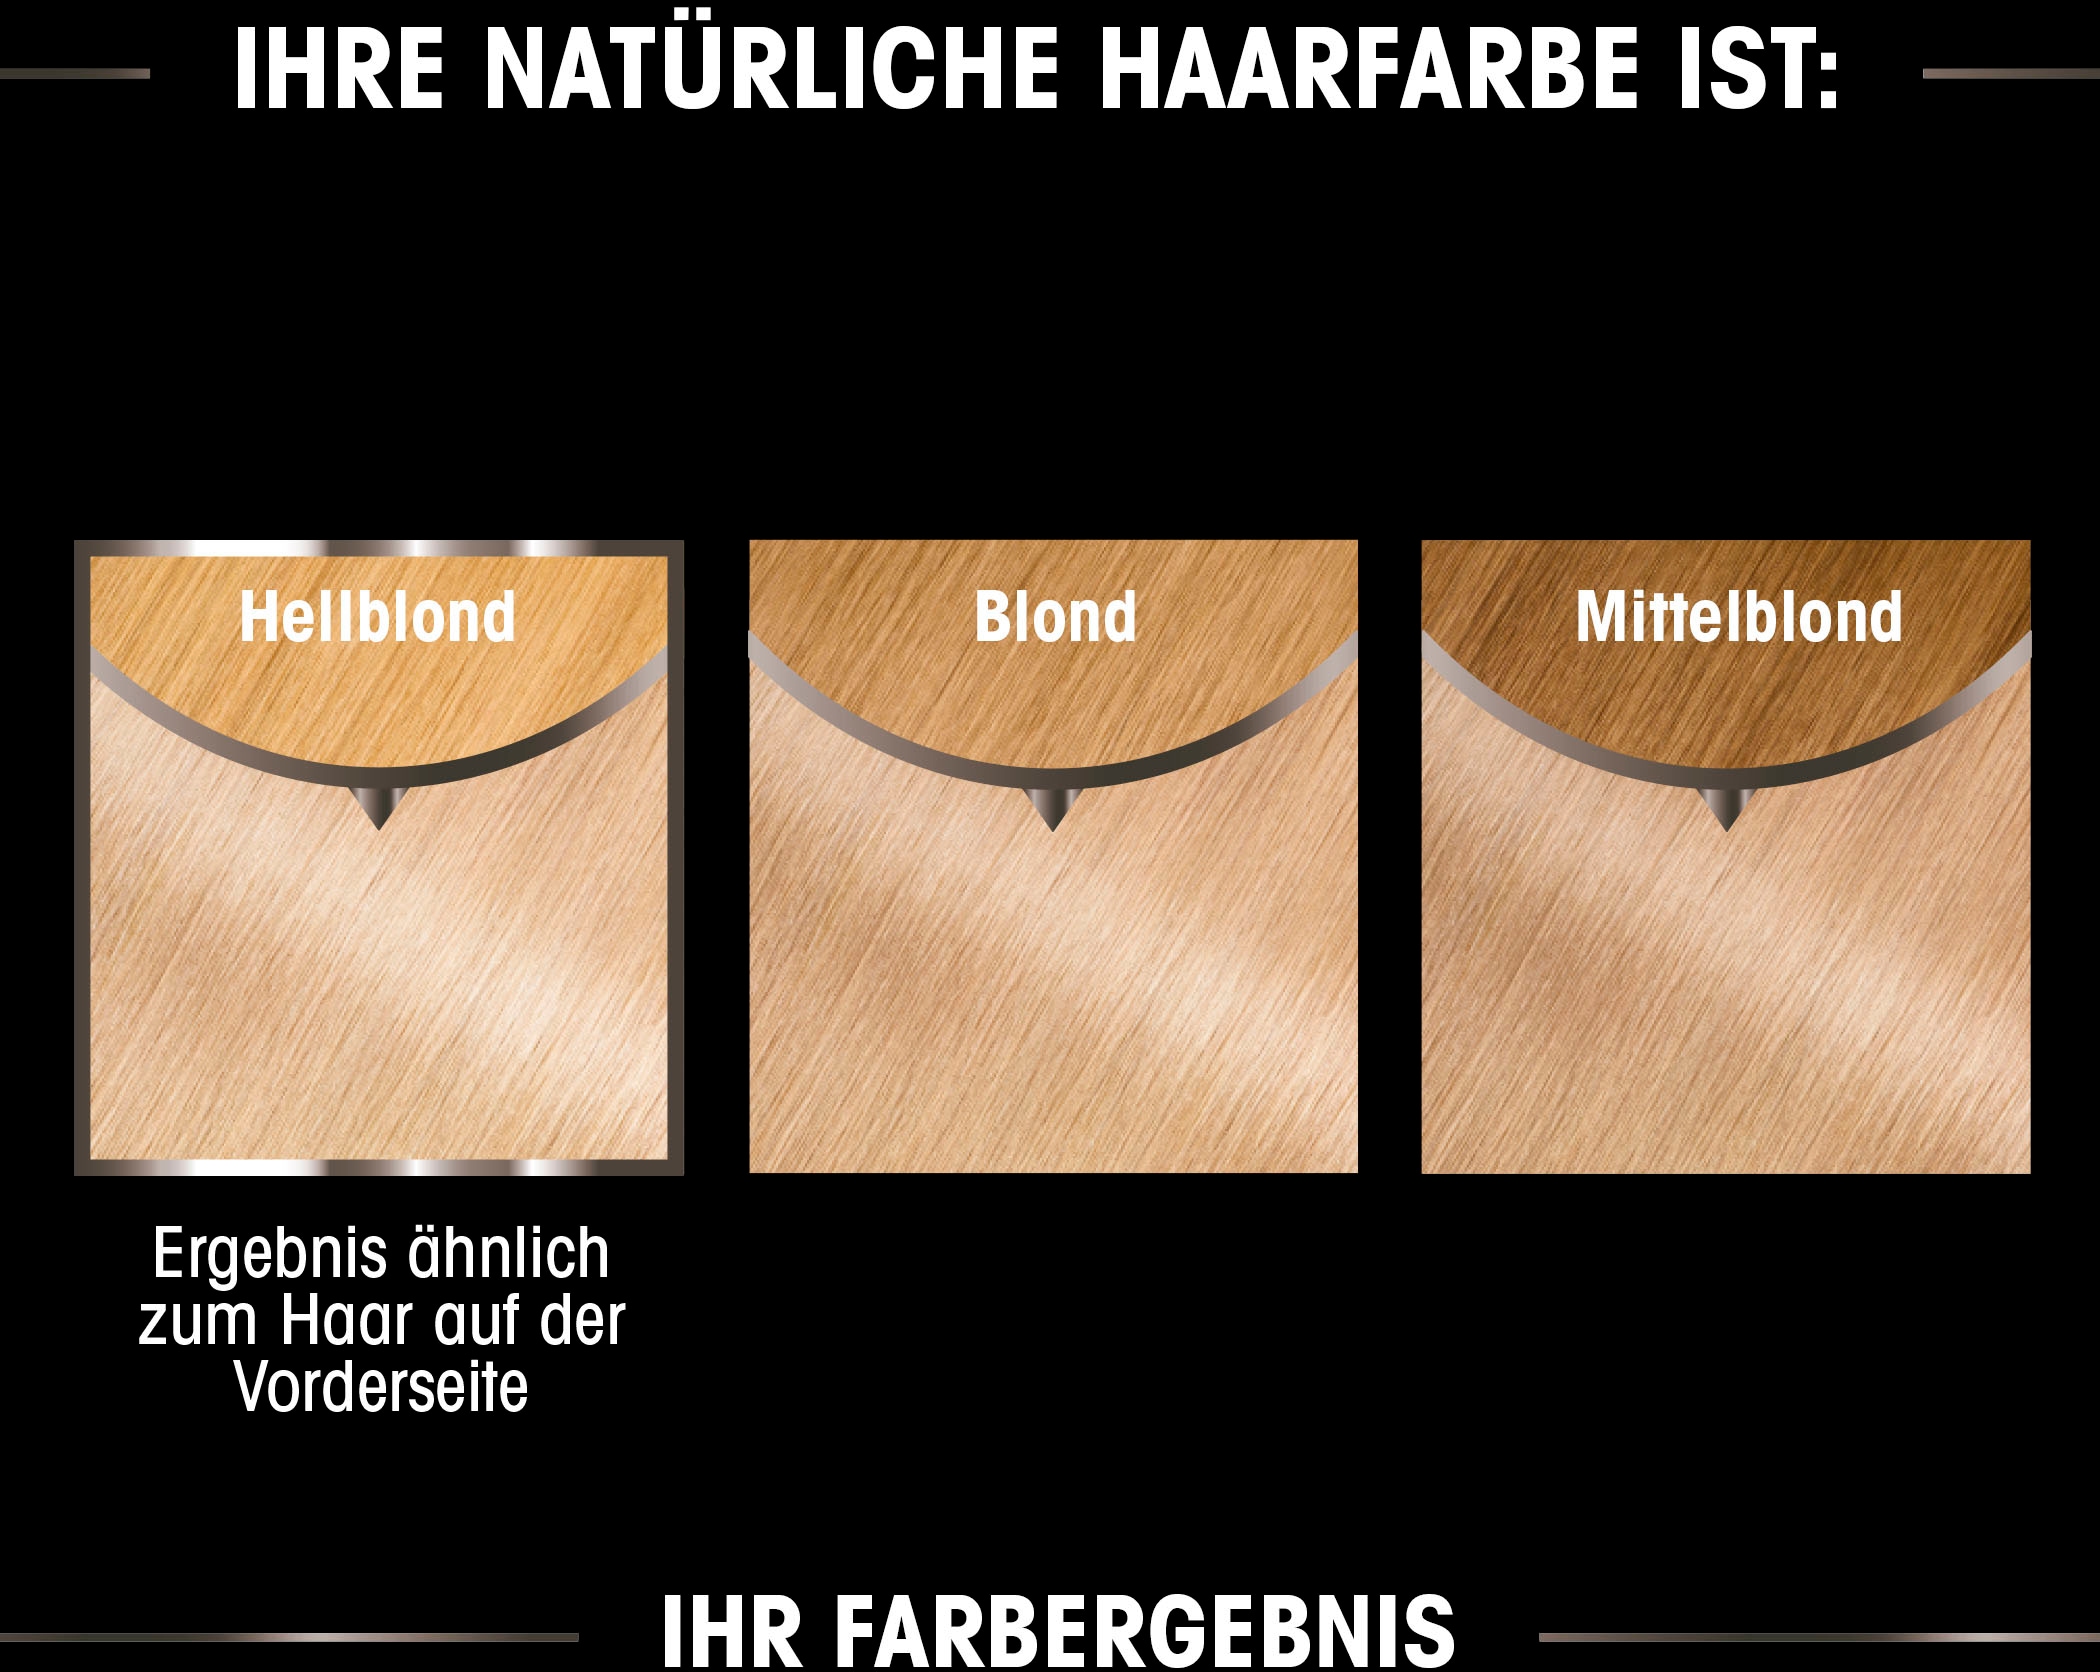 GARNIER Coloration »Garnier Olia dauerhafte Haarfarbe«, (Set, 3 tlg.),  Ölbasis | BAUR